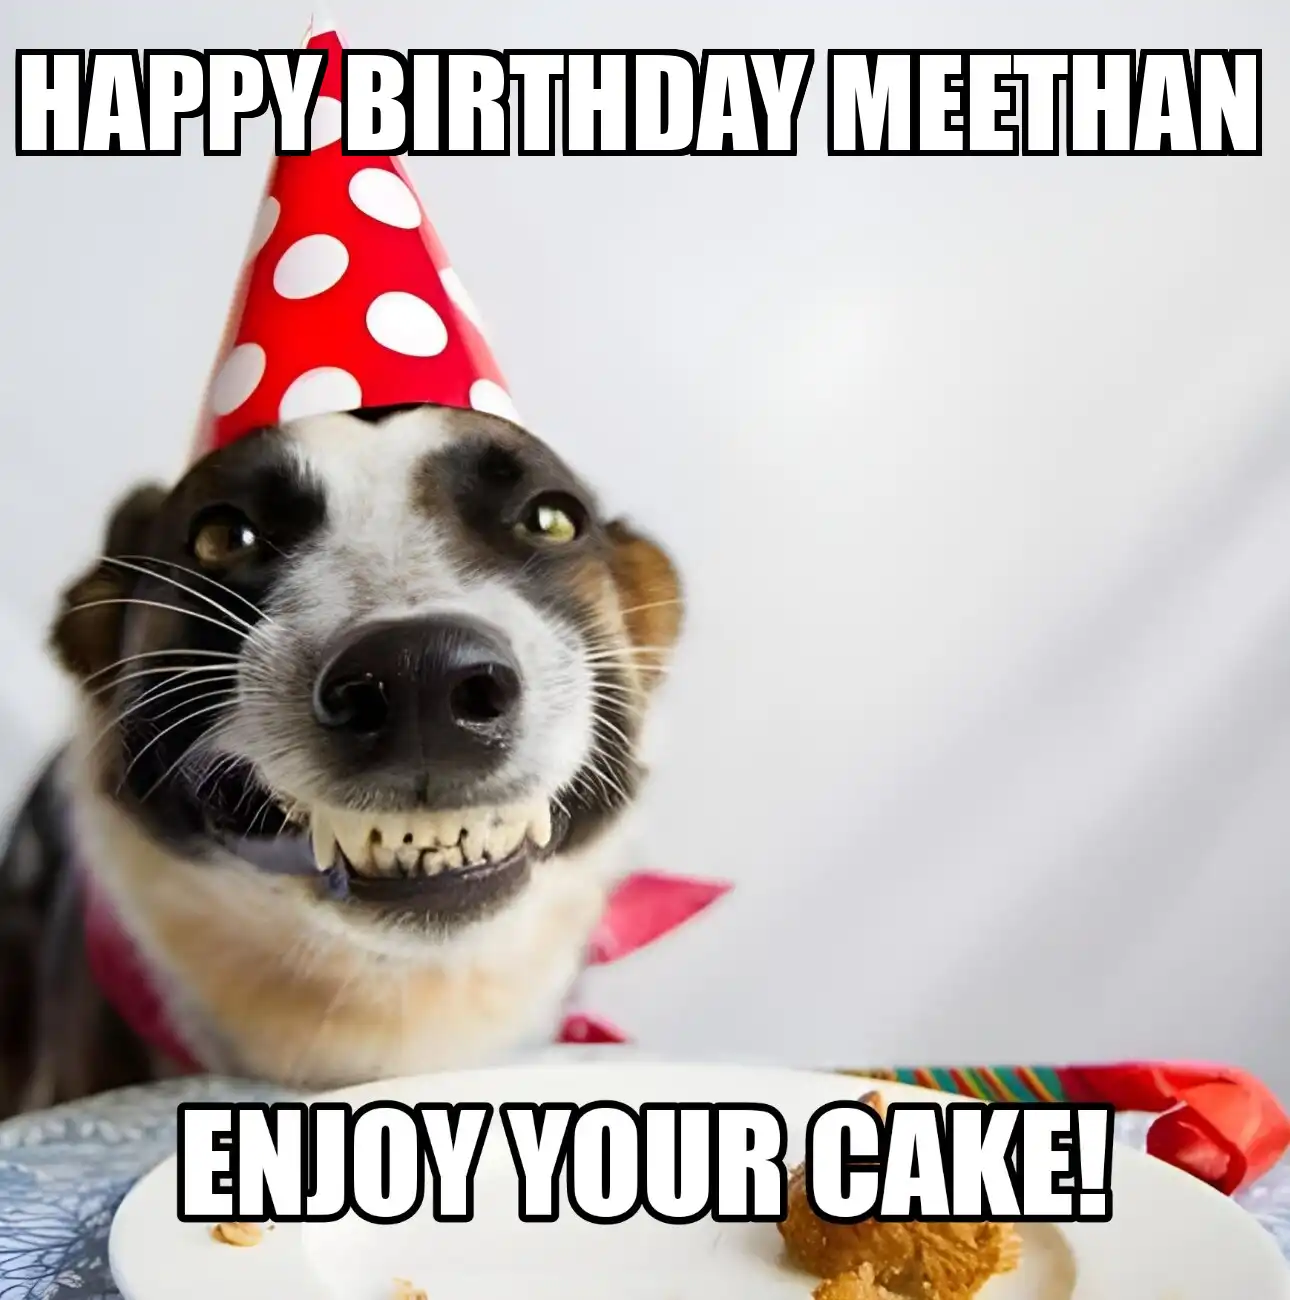 Happy Birthday Meethan Enjoy Your Cake Dog Meme